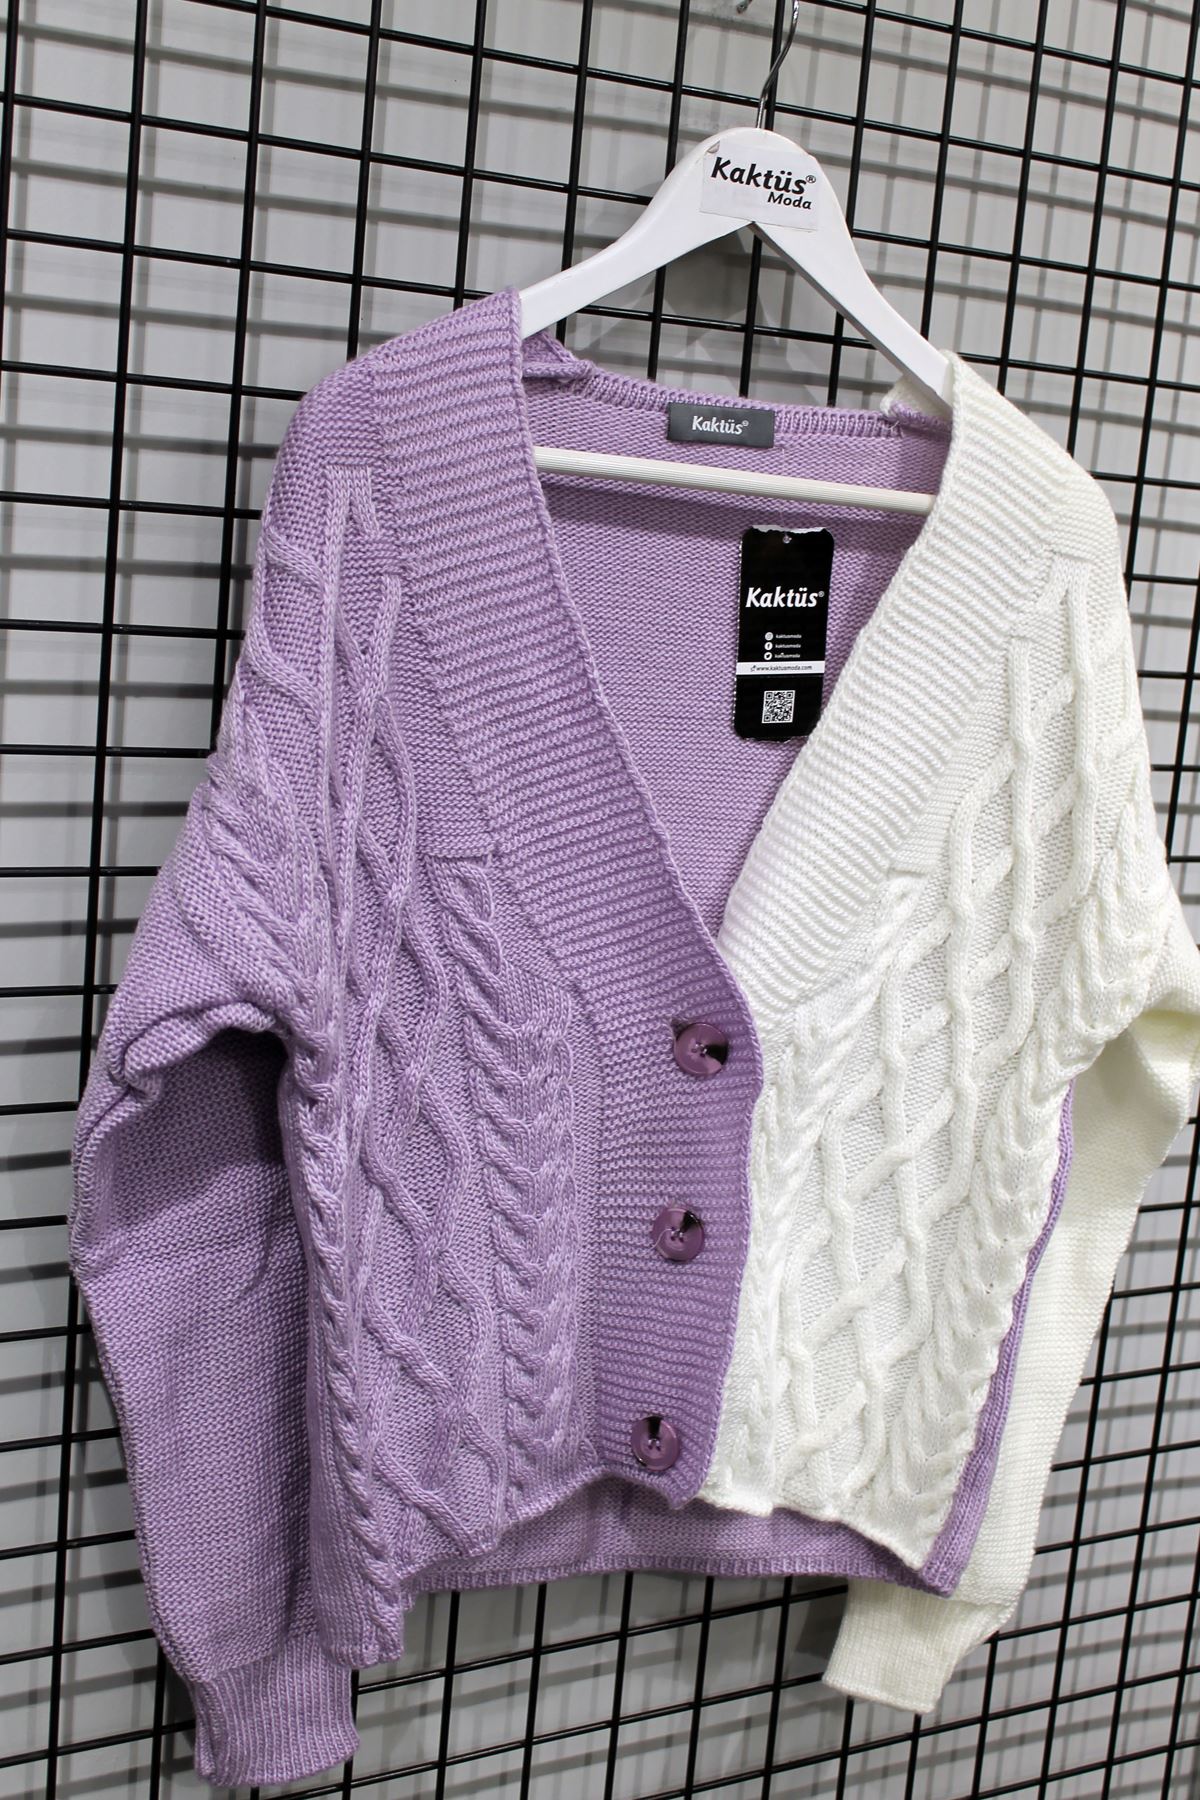 Knitwear Fabric Long Sleeve V-Neck Color-Blocked Women Cardigan - Lilac